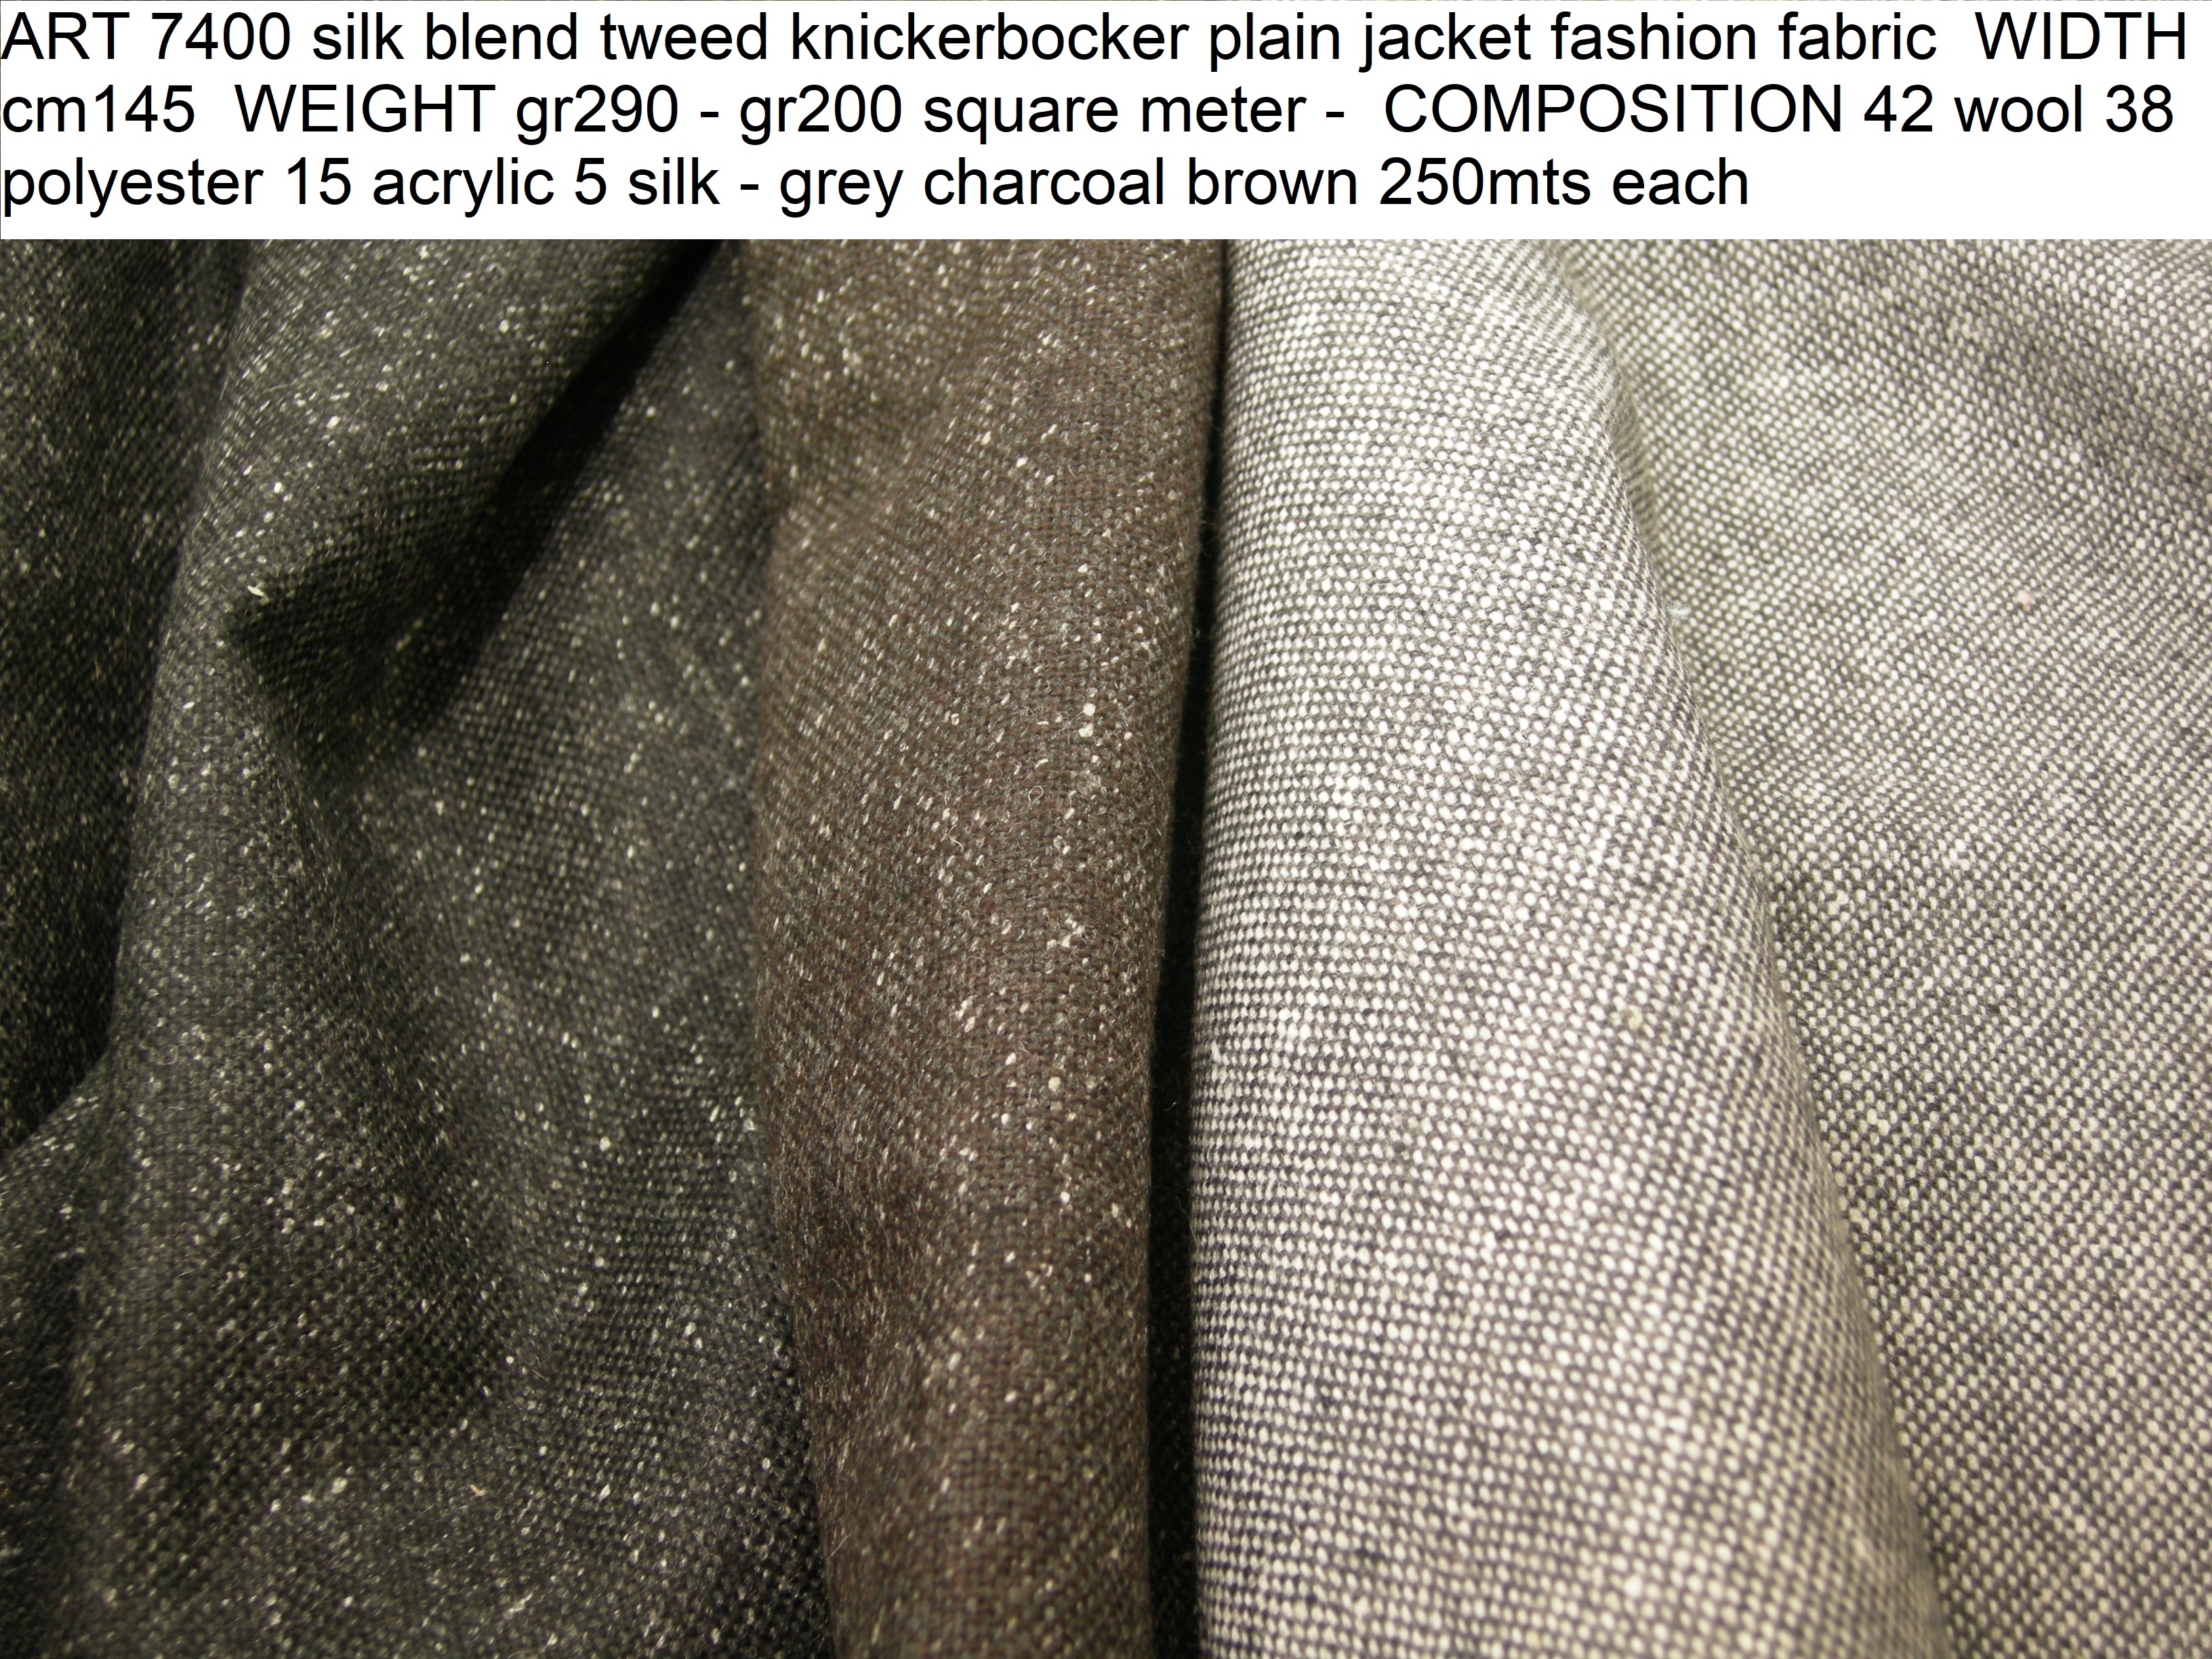 ART 7400 silk blend tweed knickerbocker plain jacket fashion fabric WIDTH cm145 WEIGHT gr290 - gr200 square meter - COMPOSITION 42 wool 38 polyester 15 acrylic 5 silk - grey charcoal brown 250mts each